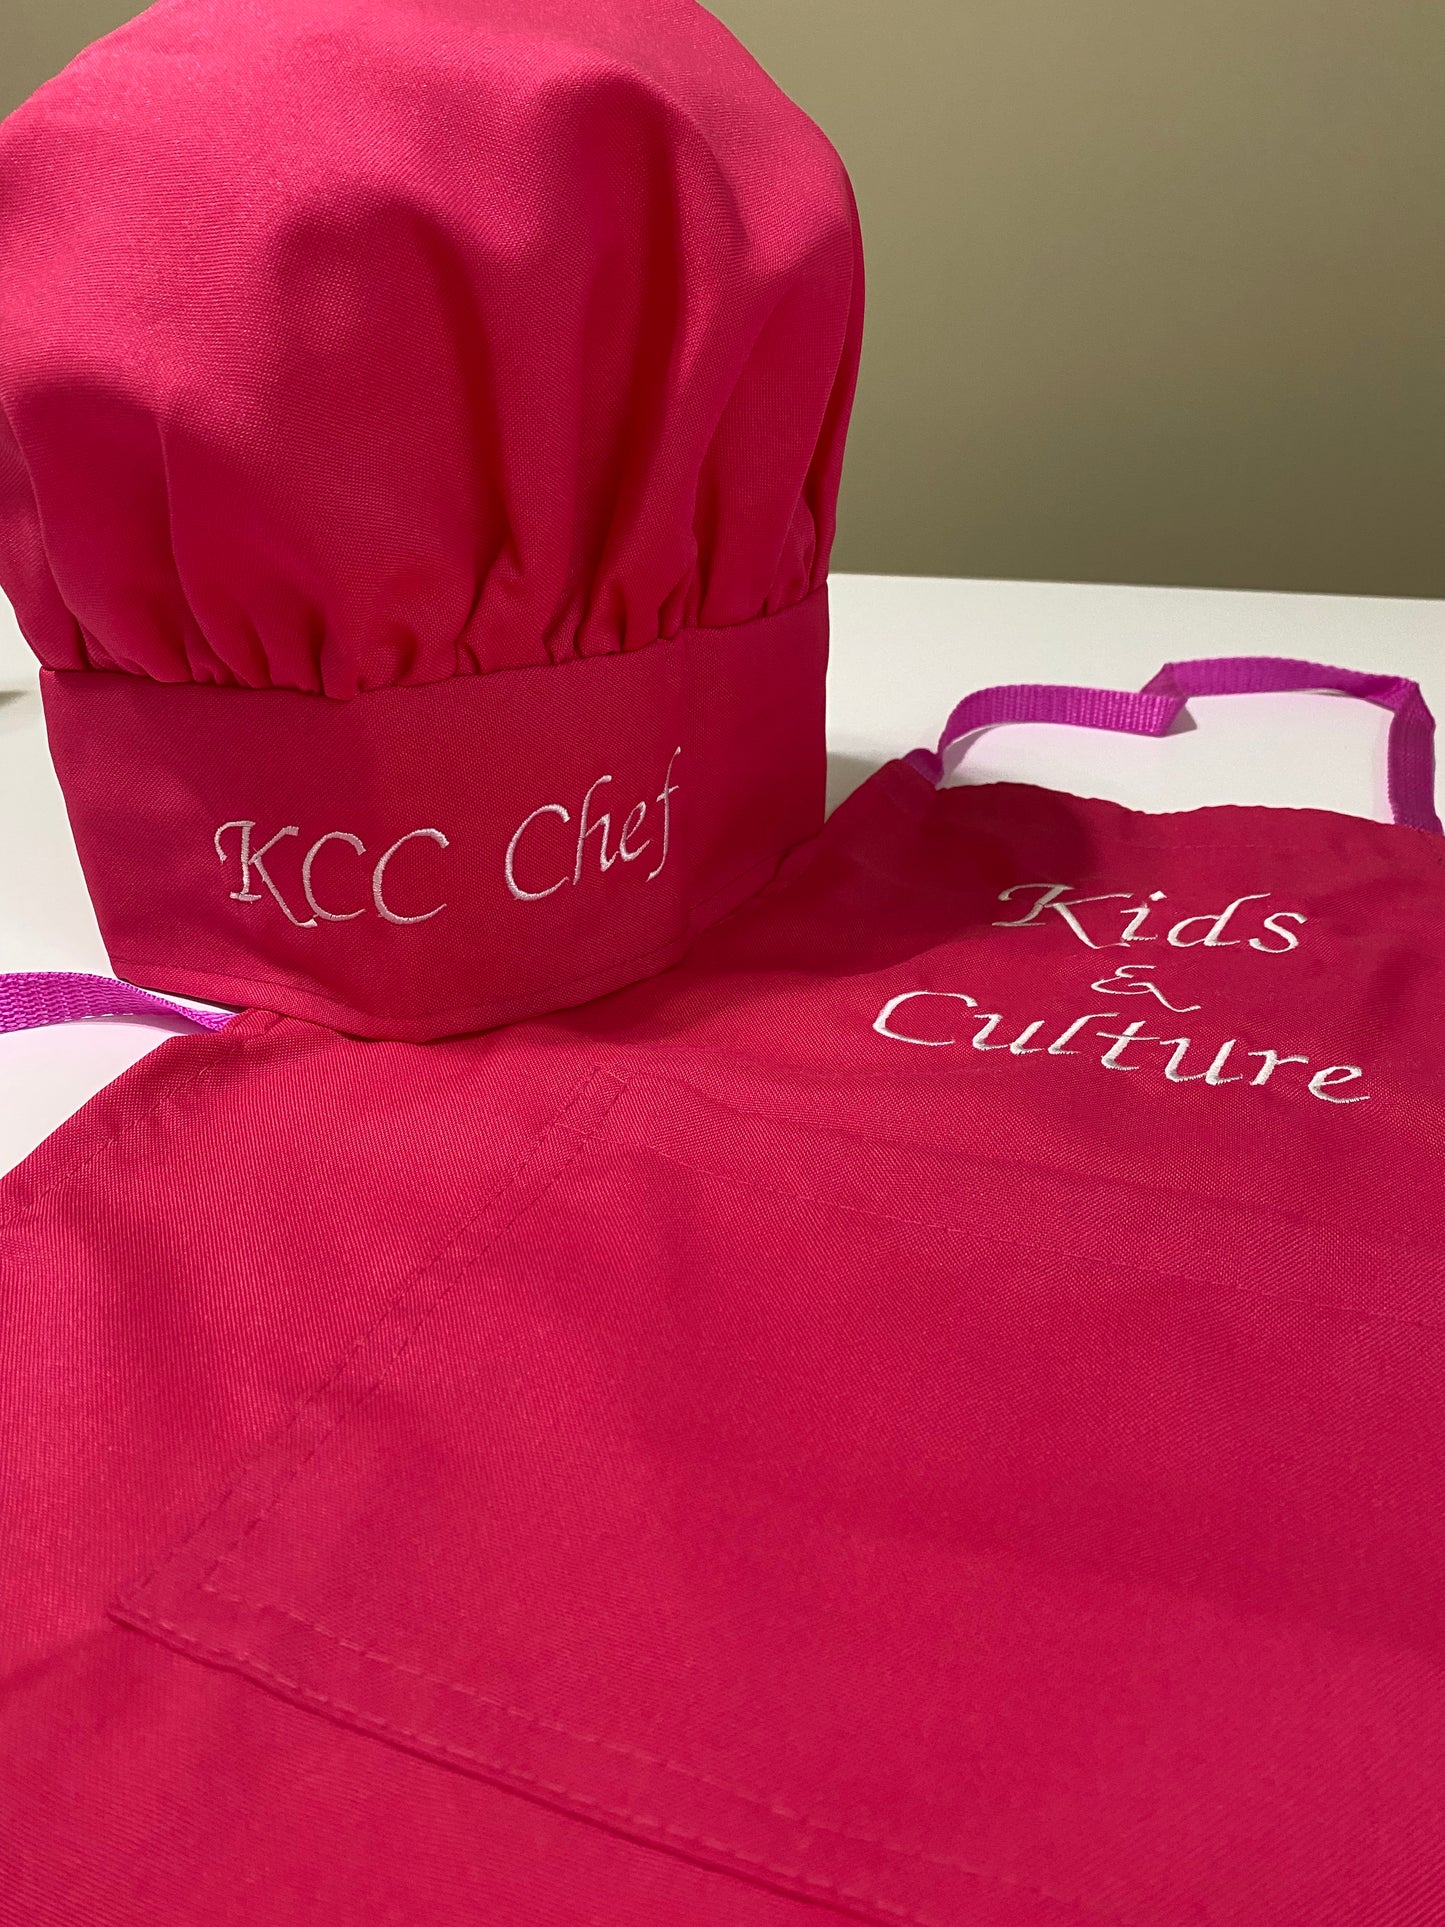 Kids & Culture Camp Apron + Hat Set (Pink)